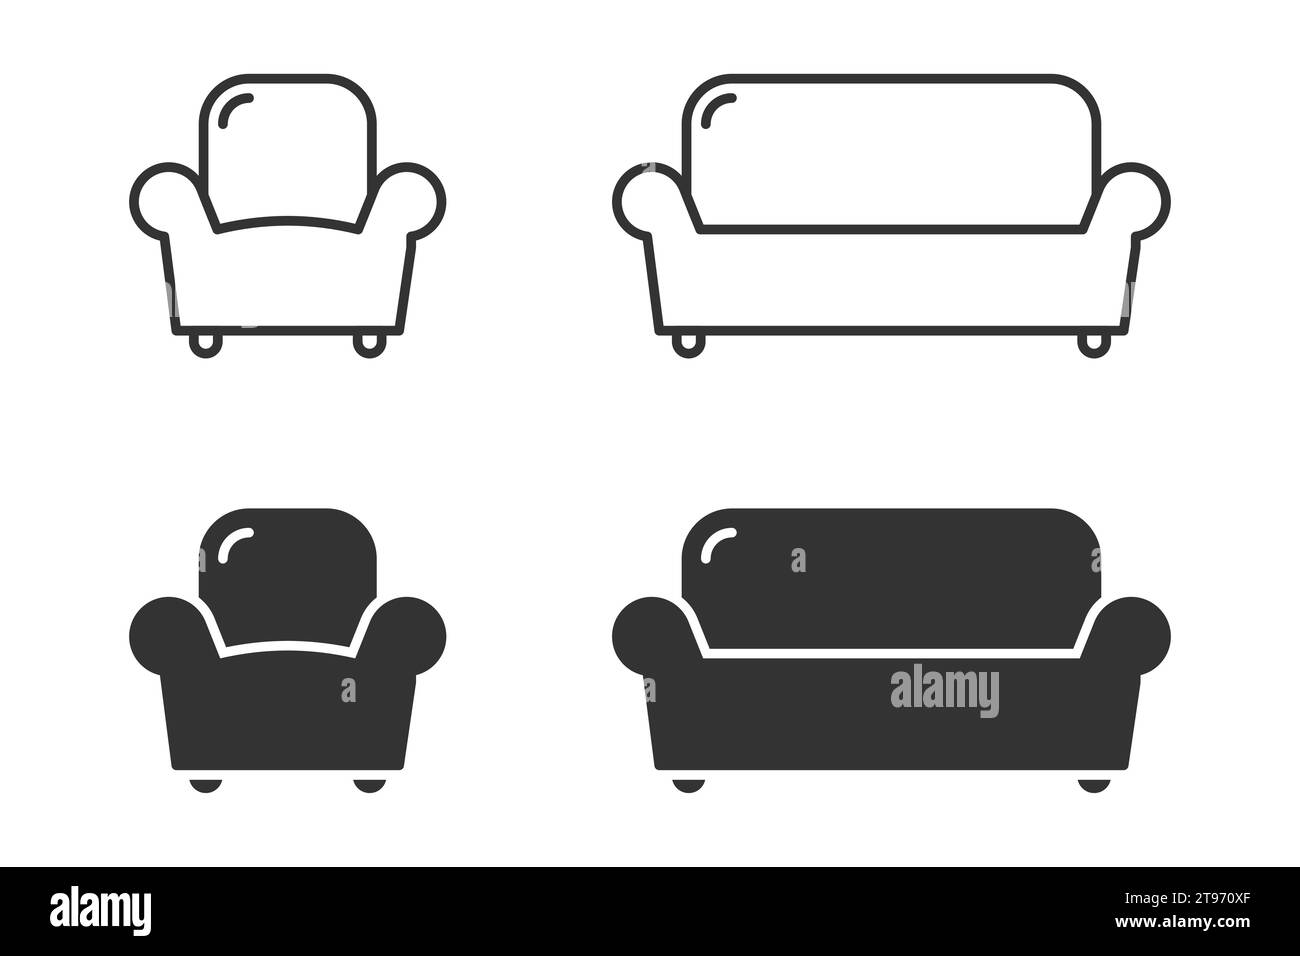 Sofa icon. Armchair icon. Vector illustration Stock Vector